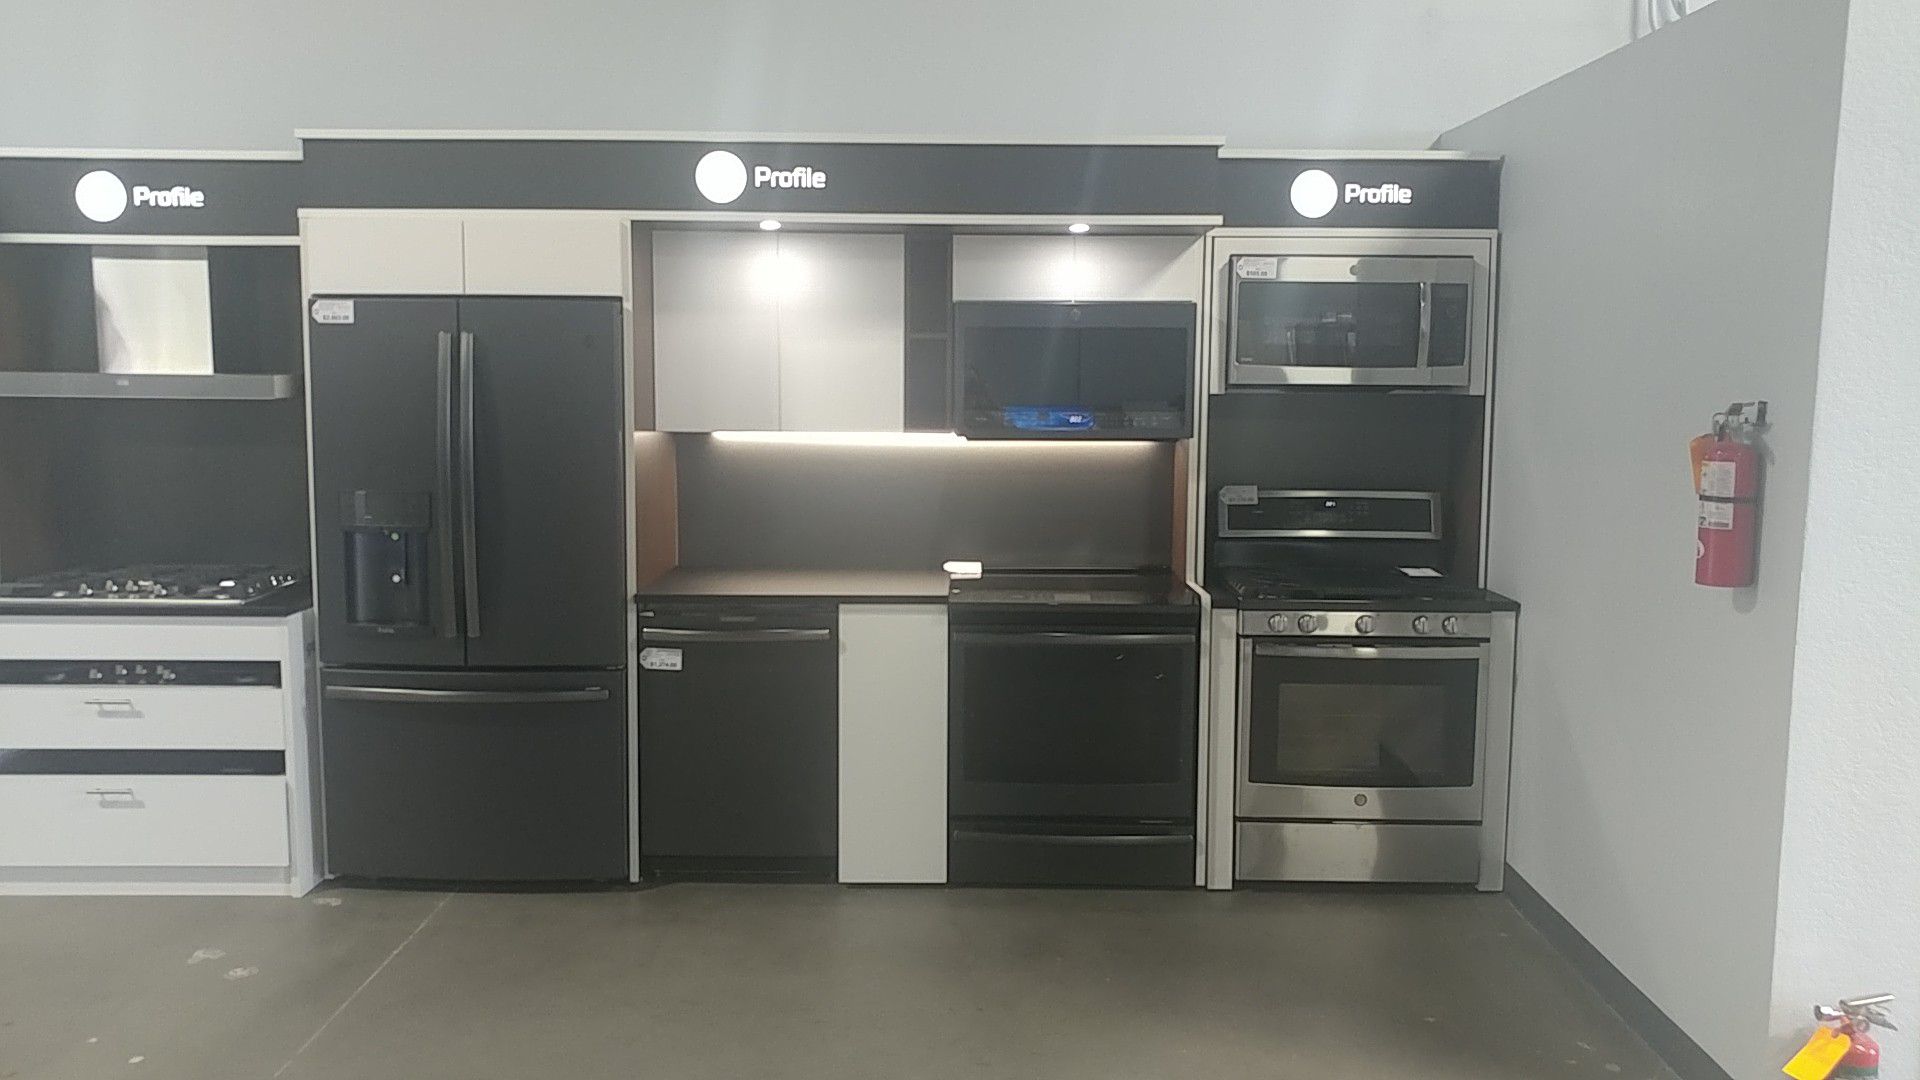 GE profile kitchen appliances